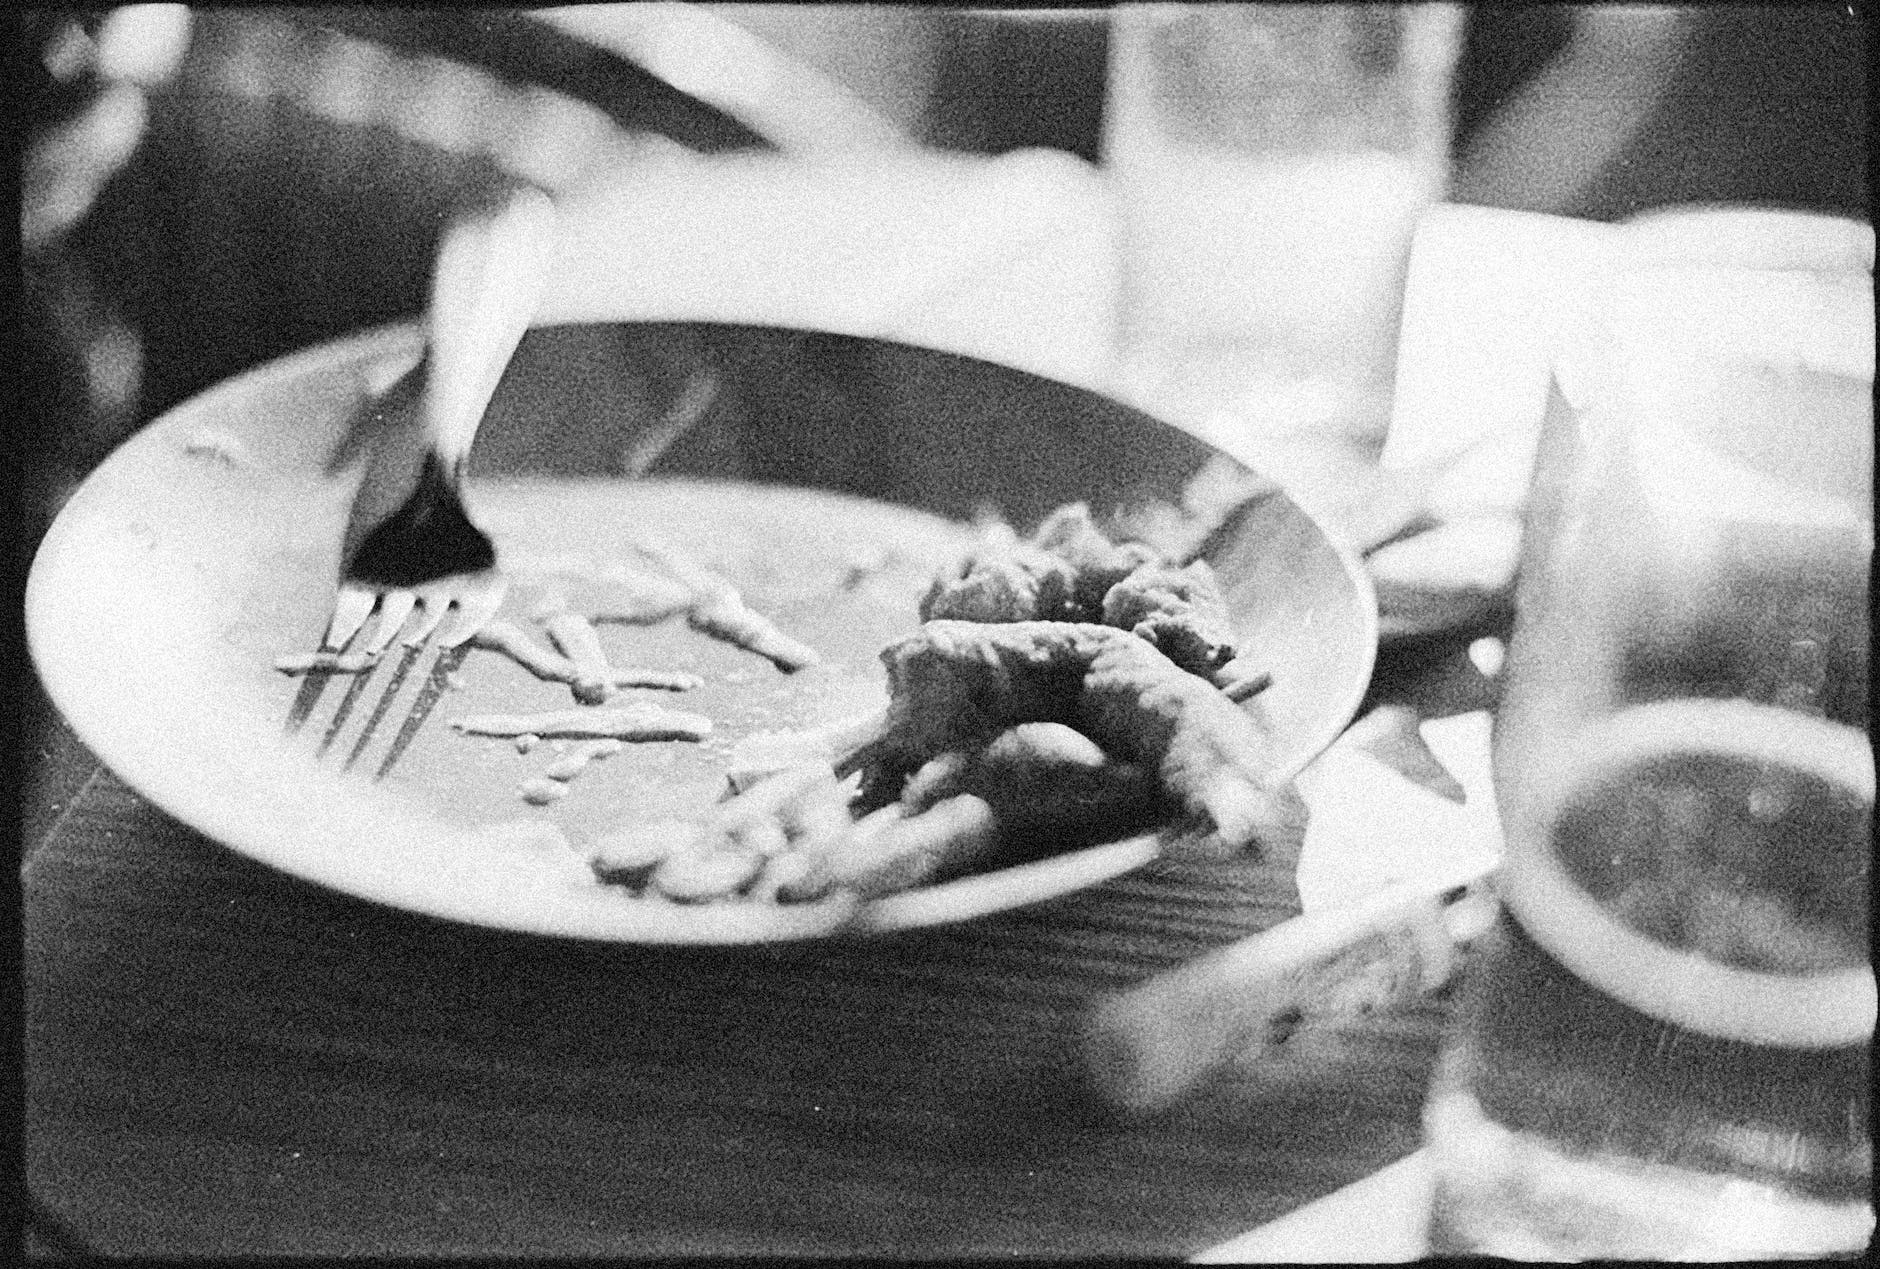 It wants to eat me. Советская диета. Лечебное питание СССР. 1940s meal.